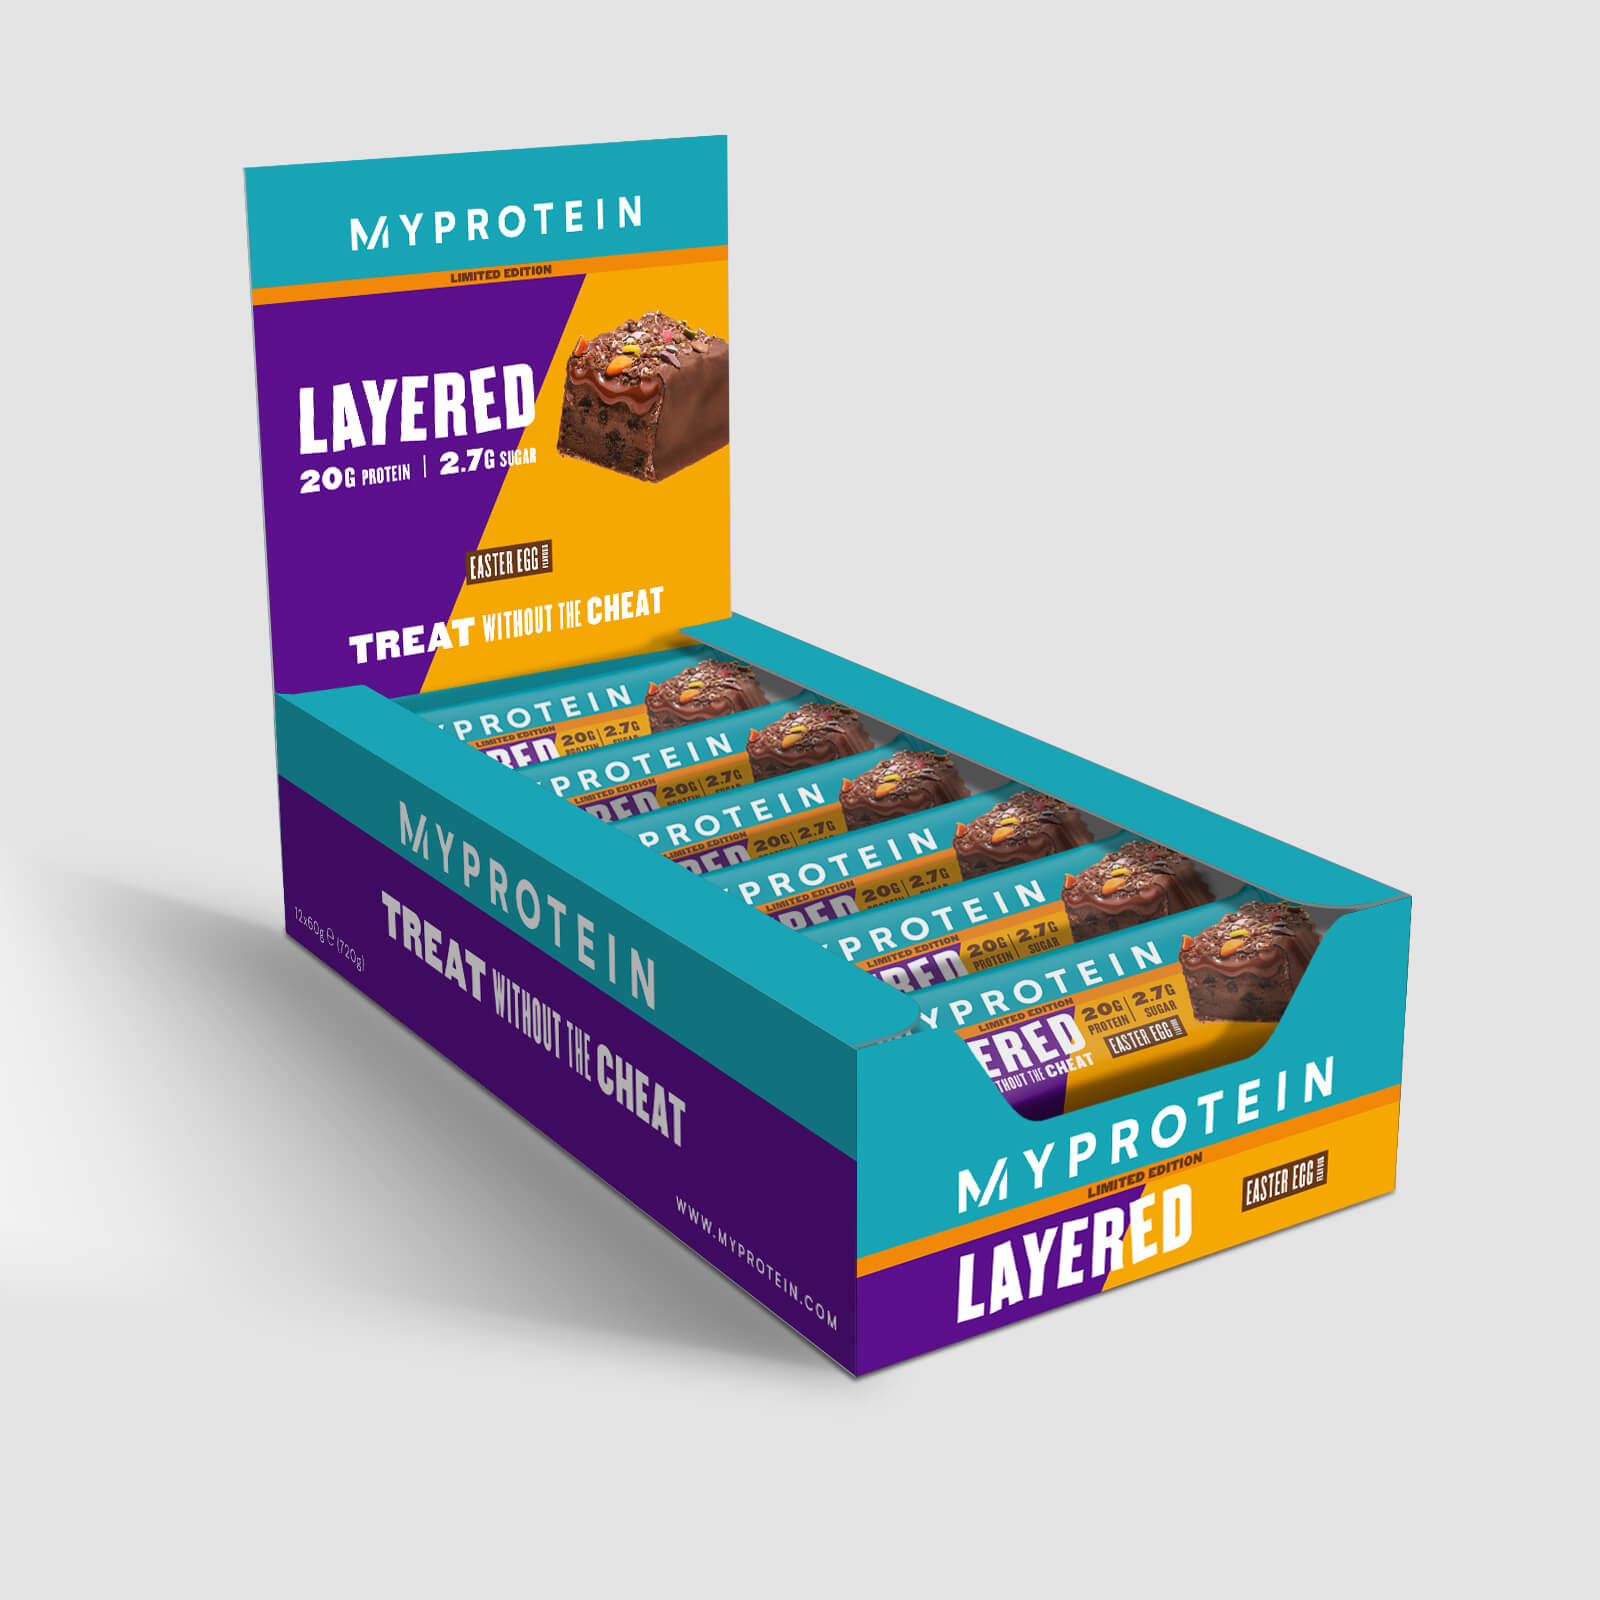 Myprotein Layered Bar - Limited Edition